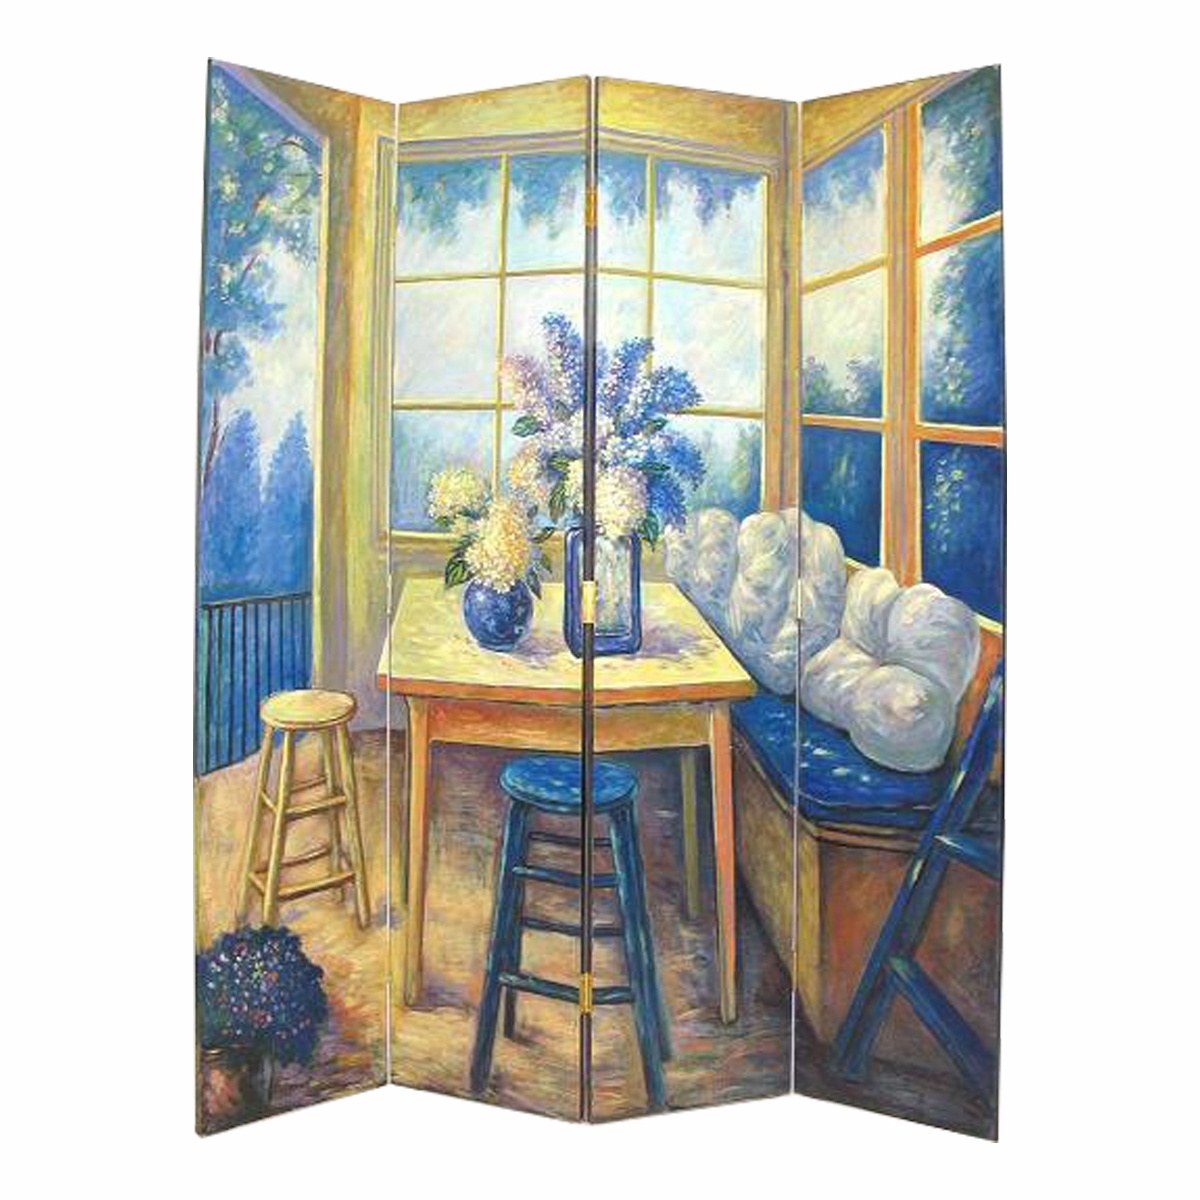 Wooden 4 Panel Room Divider With Den Interior Scene, Multicolor- Saltoro Sherpi